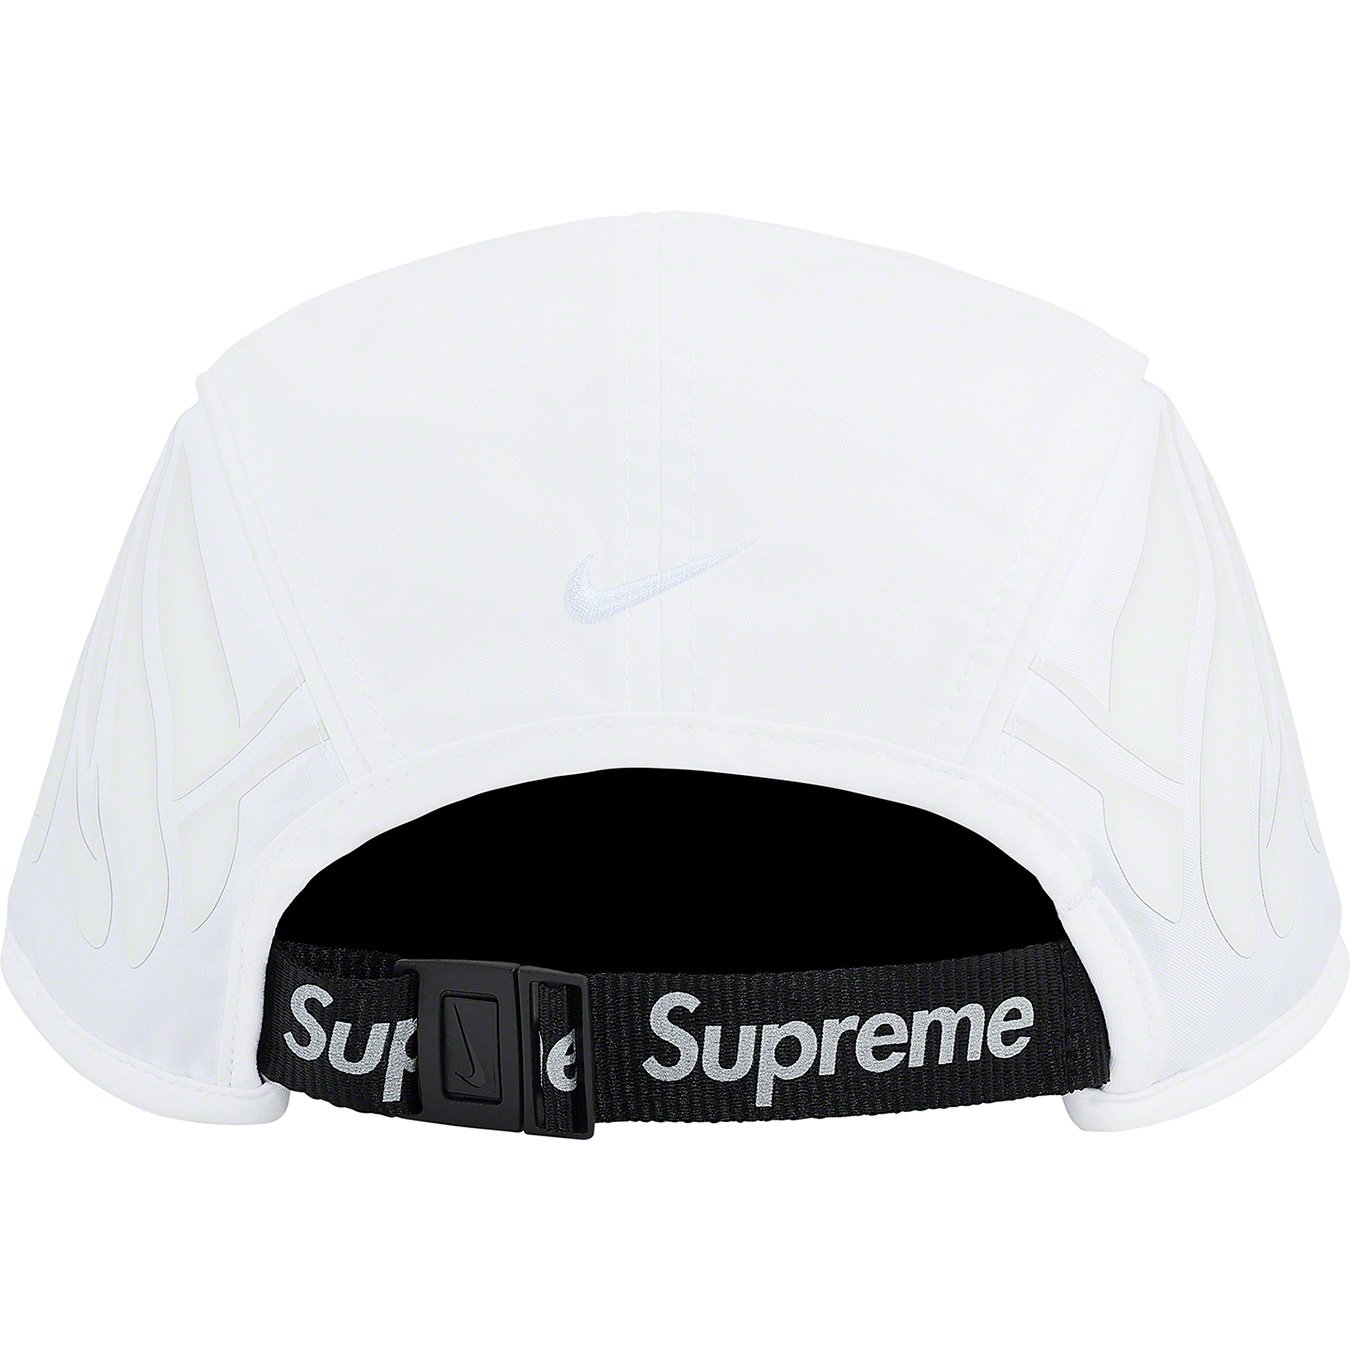 Supreme Nike Air Max Running Hat White